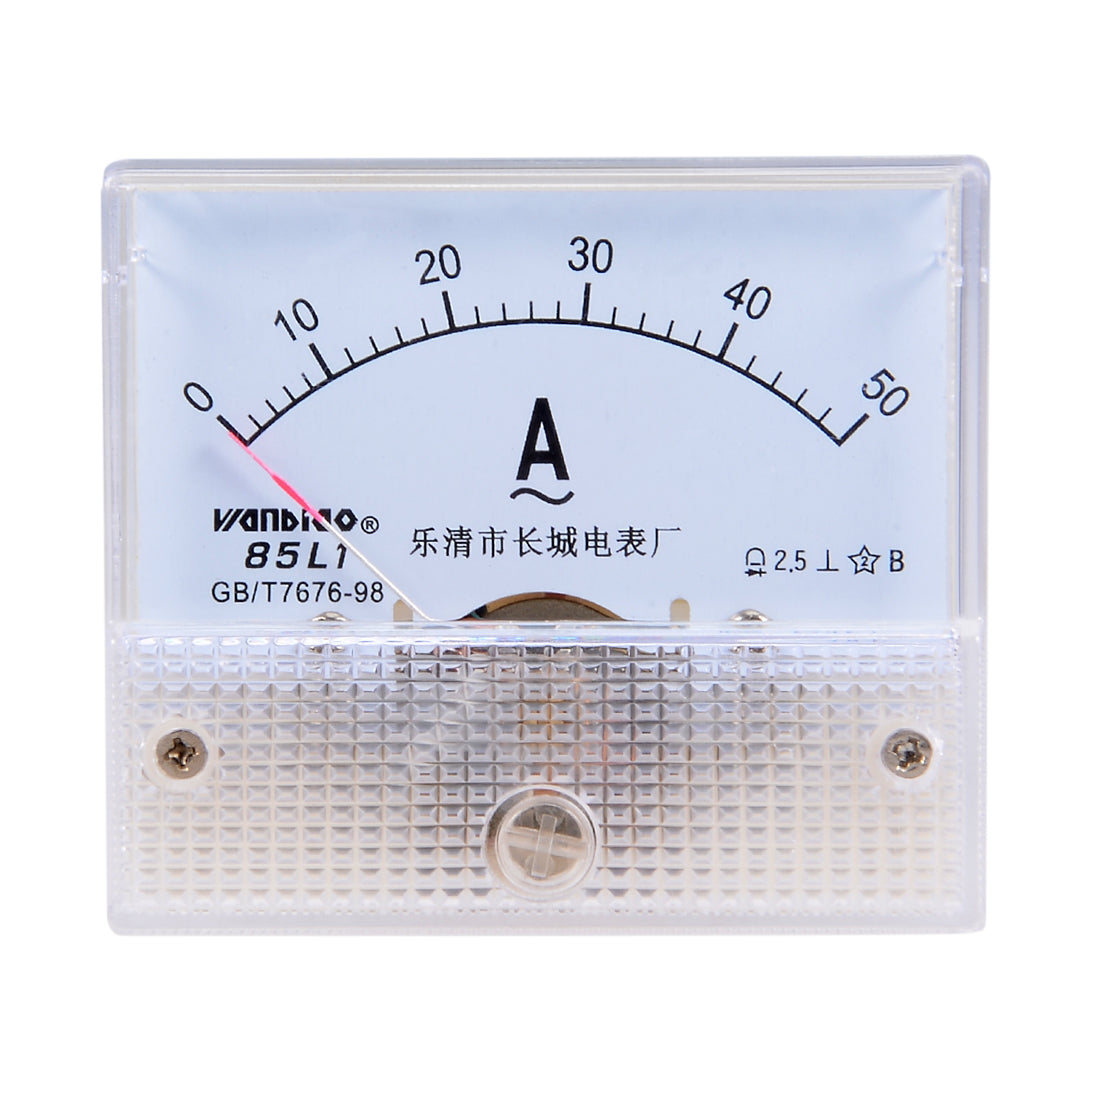 uxcell Uxcell AC 0-50A Analog Panel Ammeter Gauge Ampere Current Meter 85L1 2.5 Error Margin